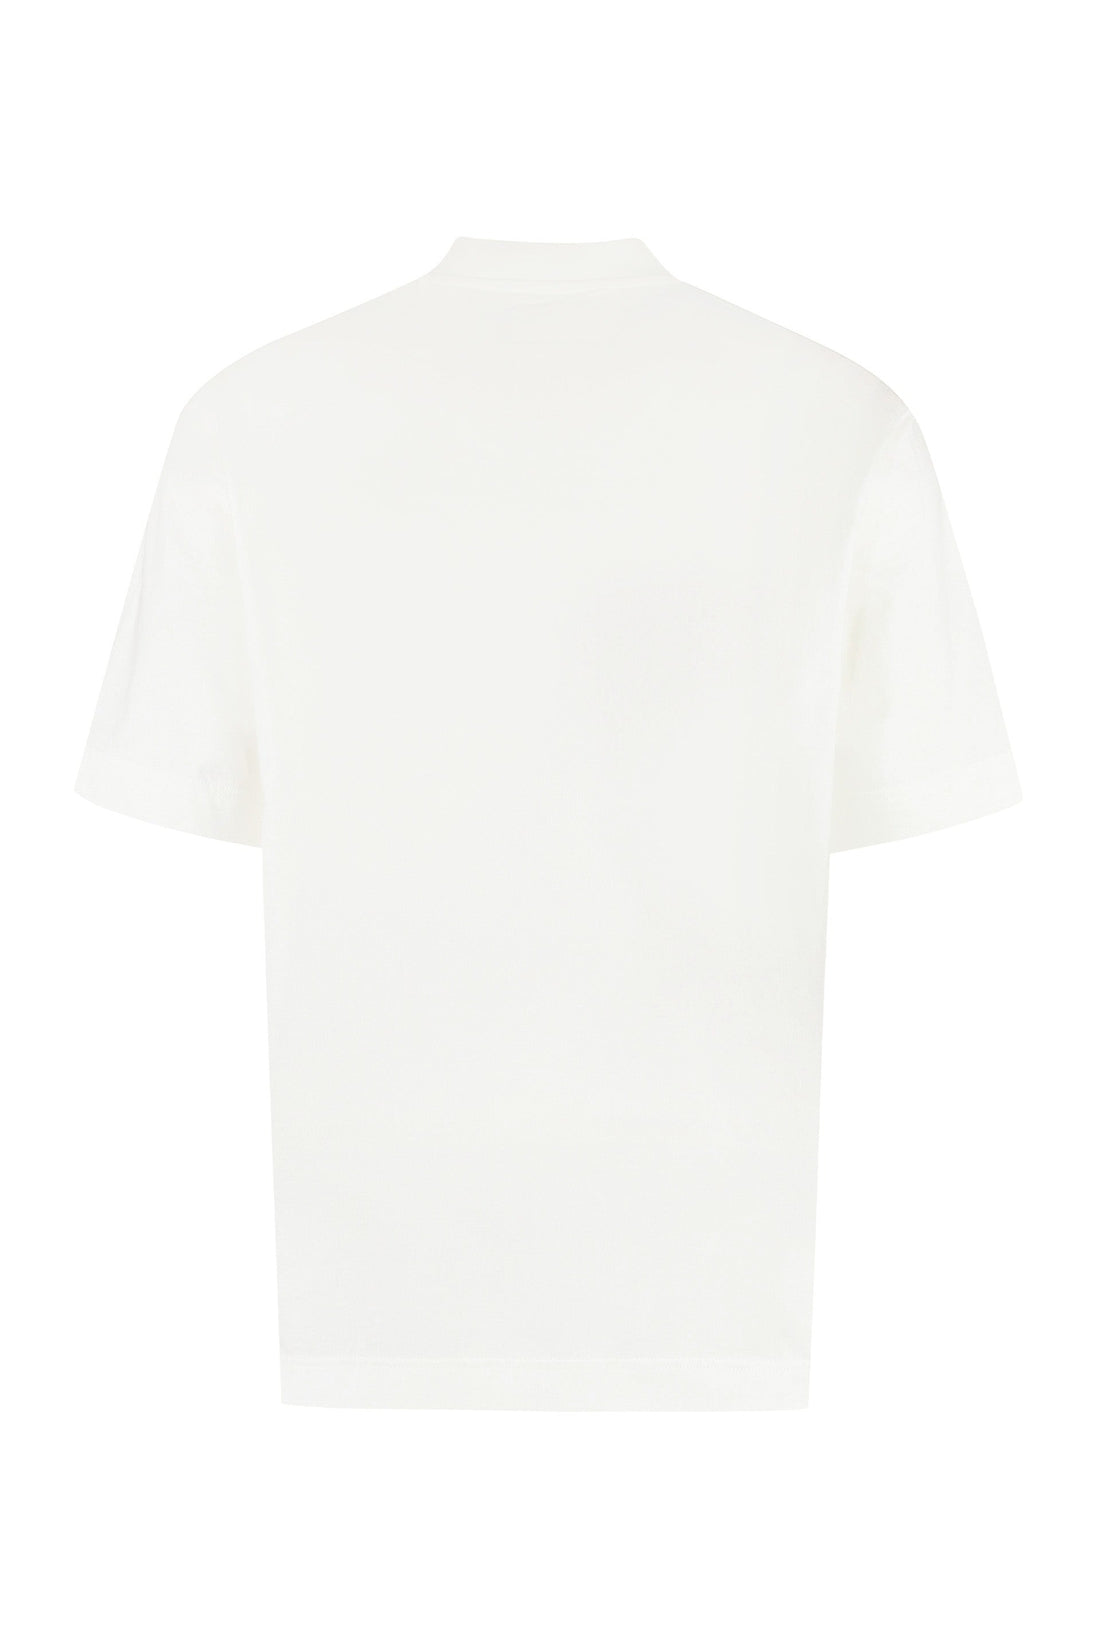 adidas Y-3-OUTLET-SALE-Printed cotton T-shirt-ARCHIVIST